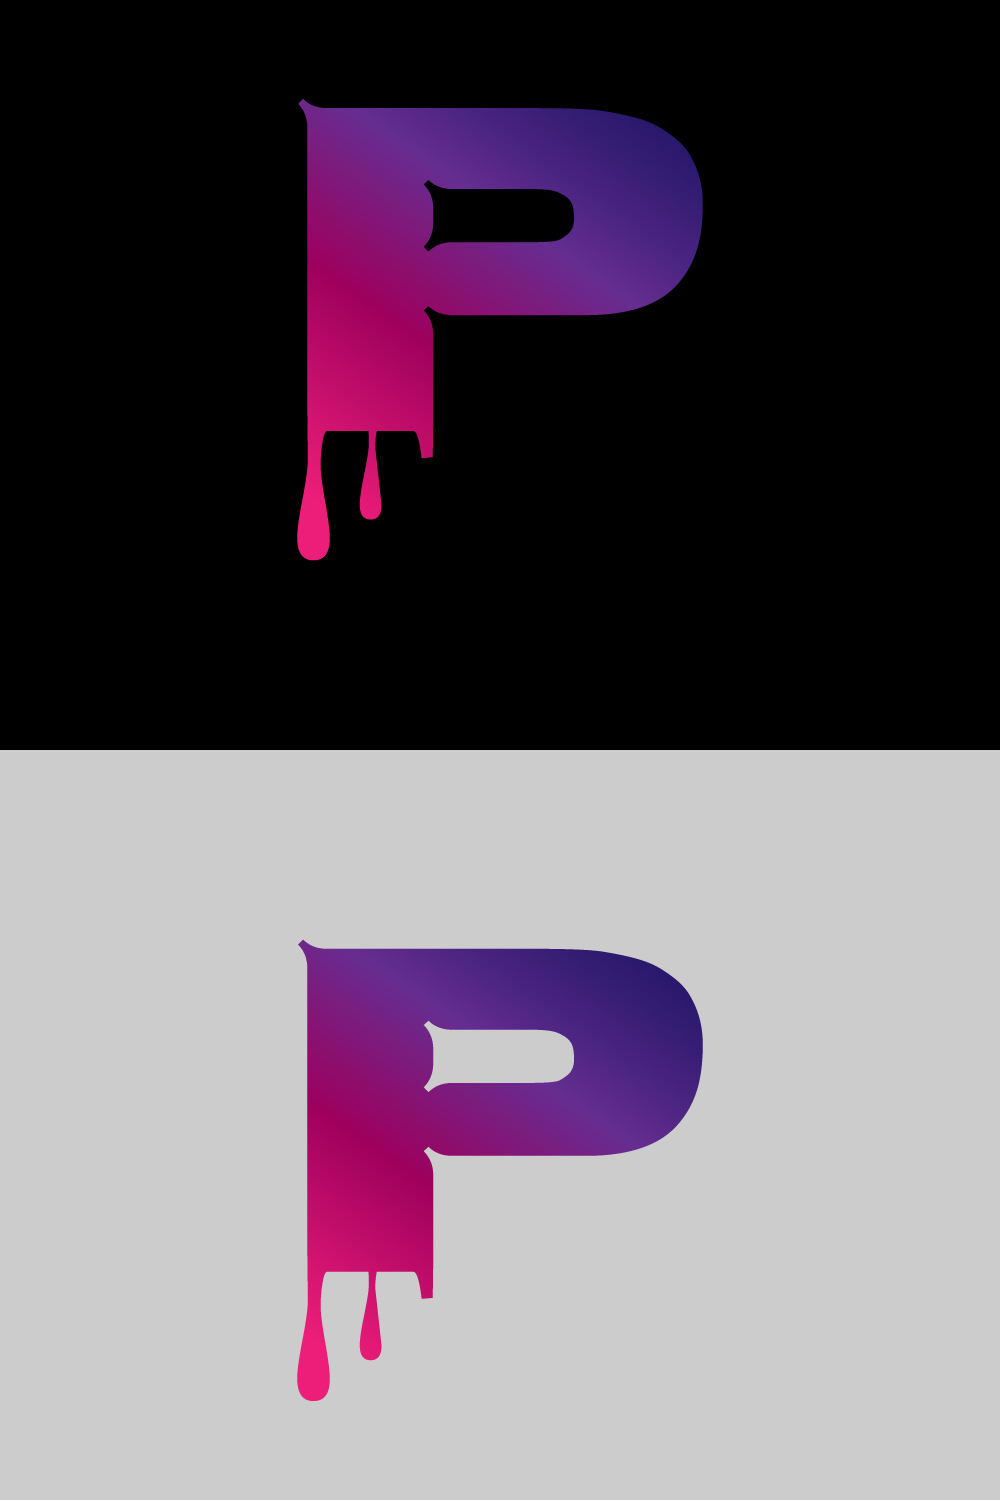 P logo pinterest preview image.